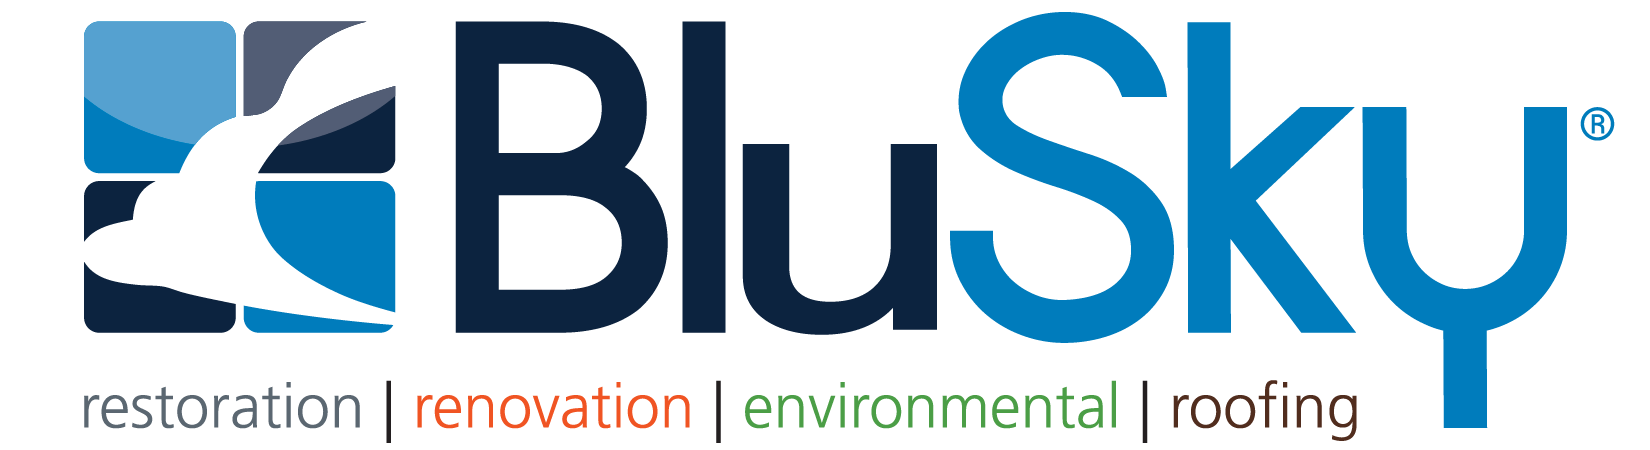 BluSky_logo_tags